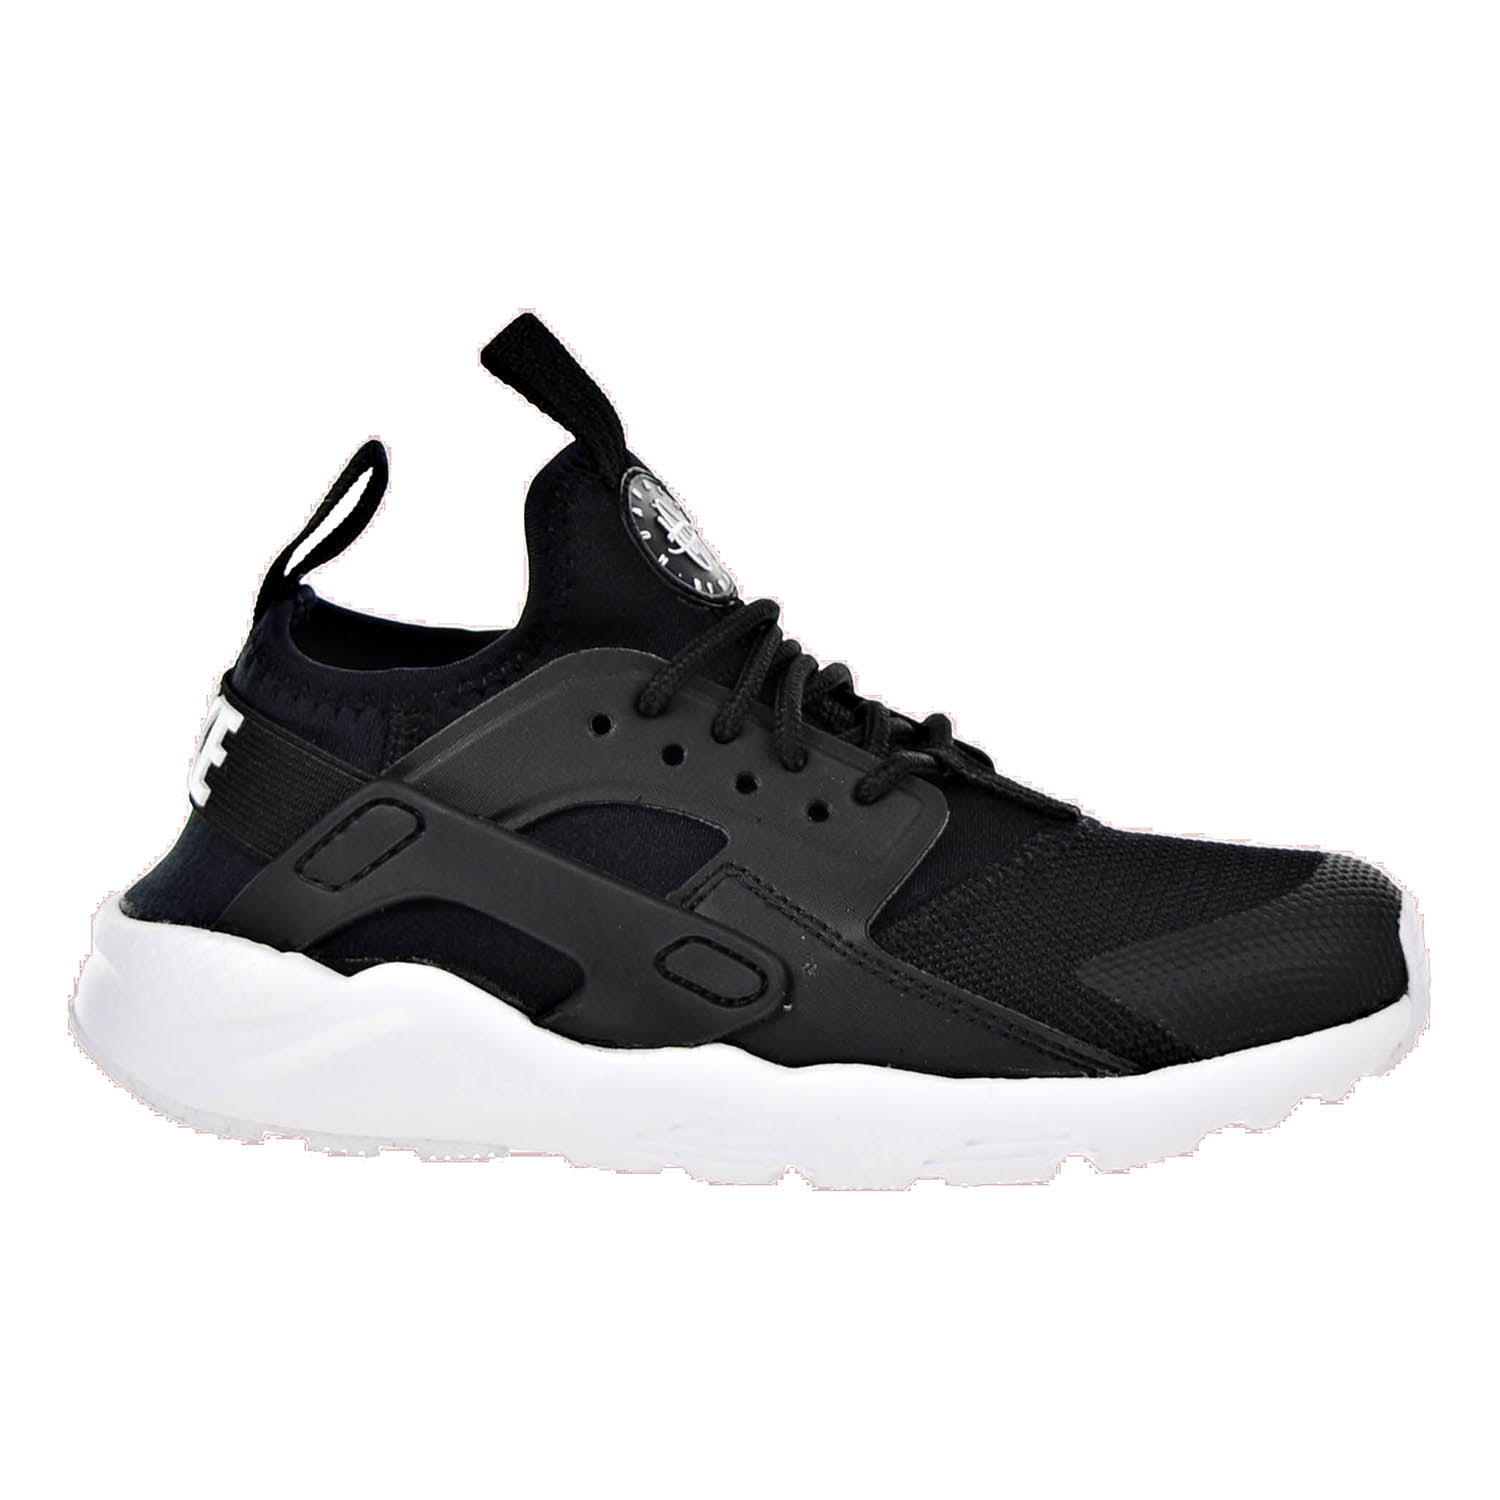 Nike Huarache Ultra Little Kid's Shoes Black/White 859593-020 - Walmart.com